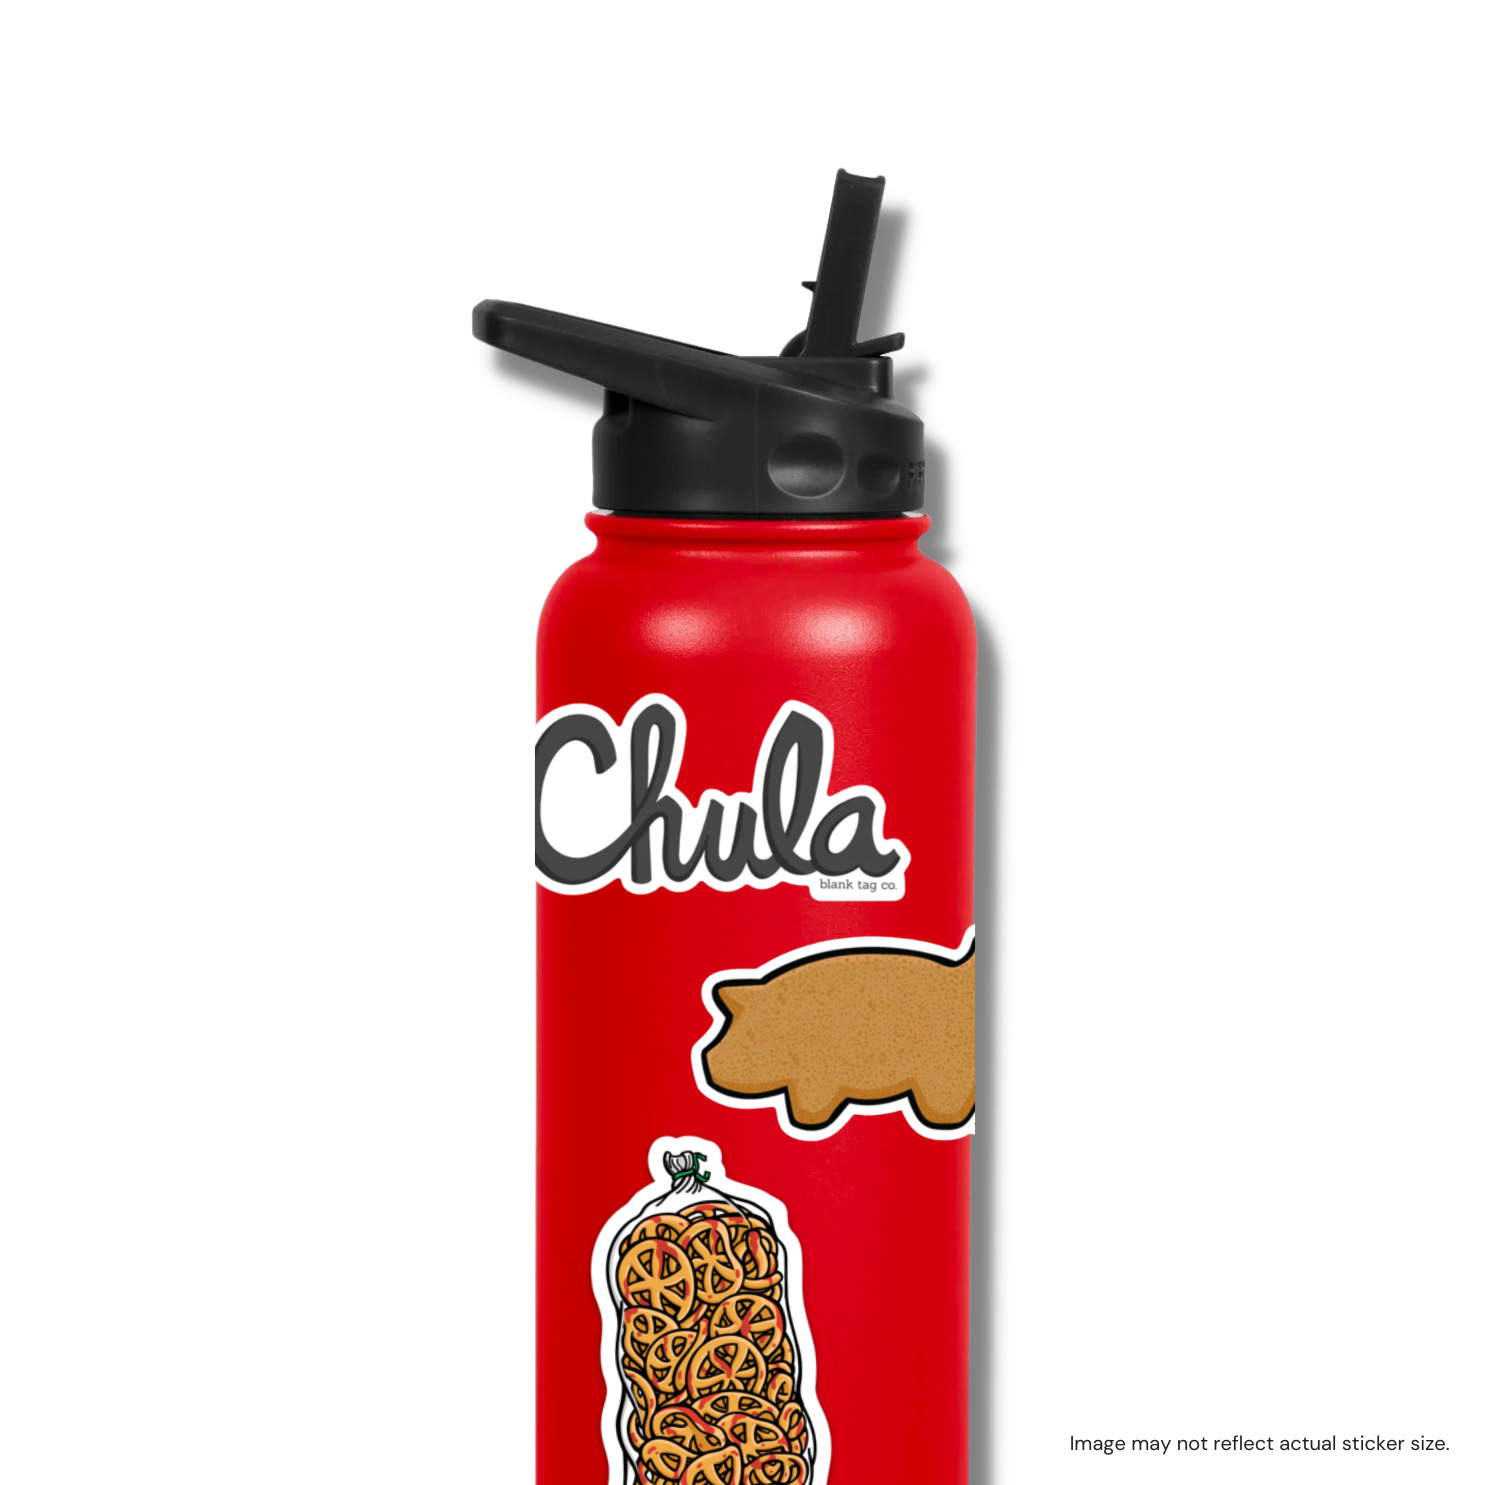 The Chula Sticker